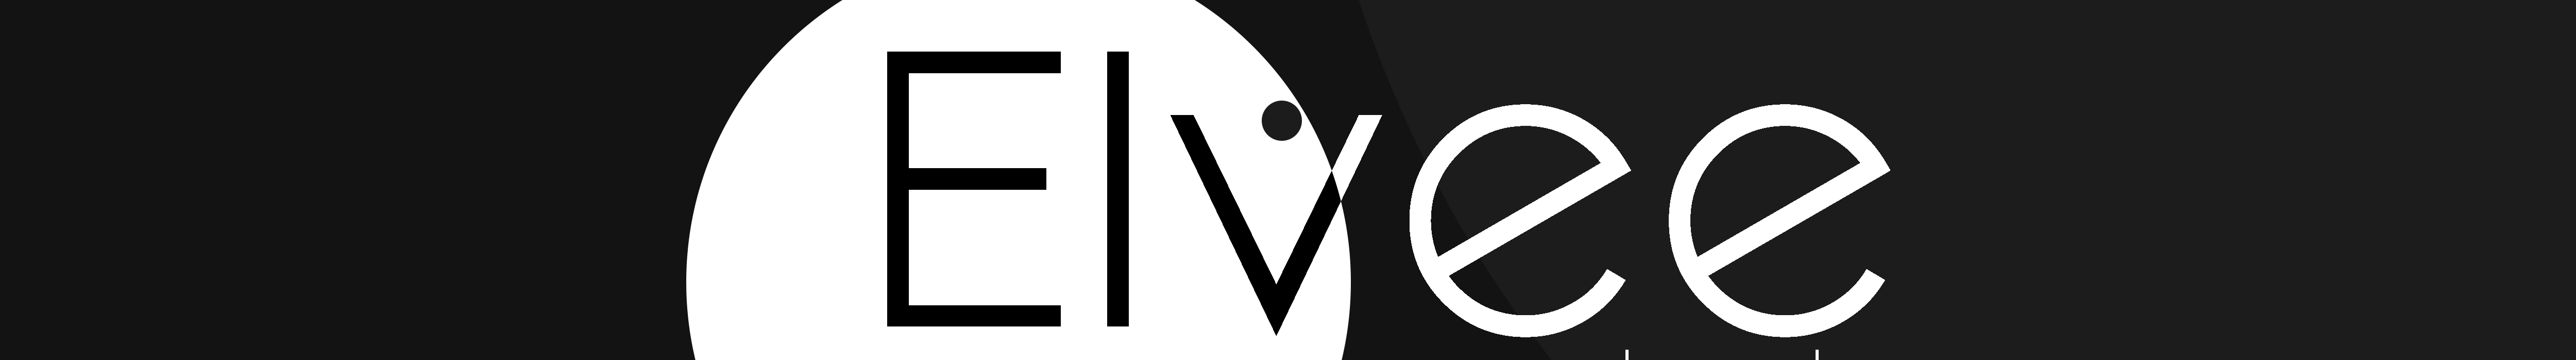 Elvee Infotech's profile banner